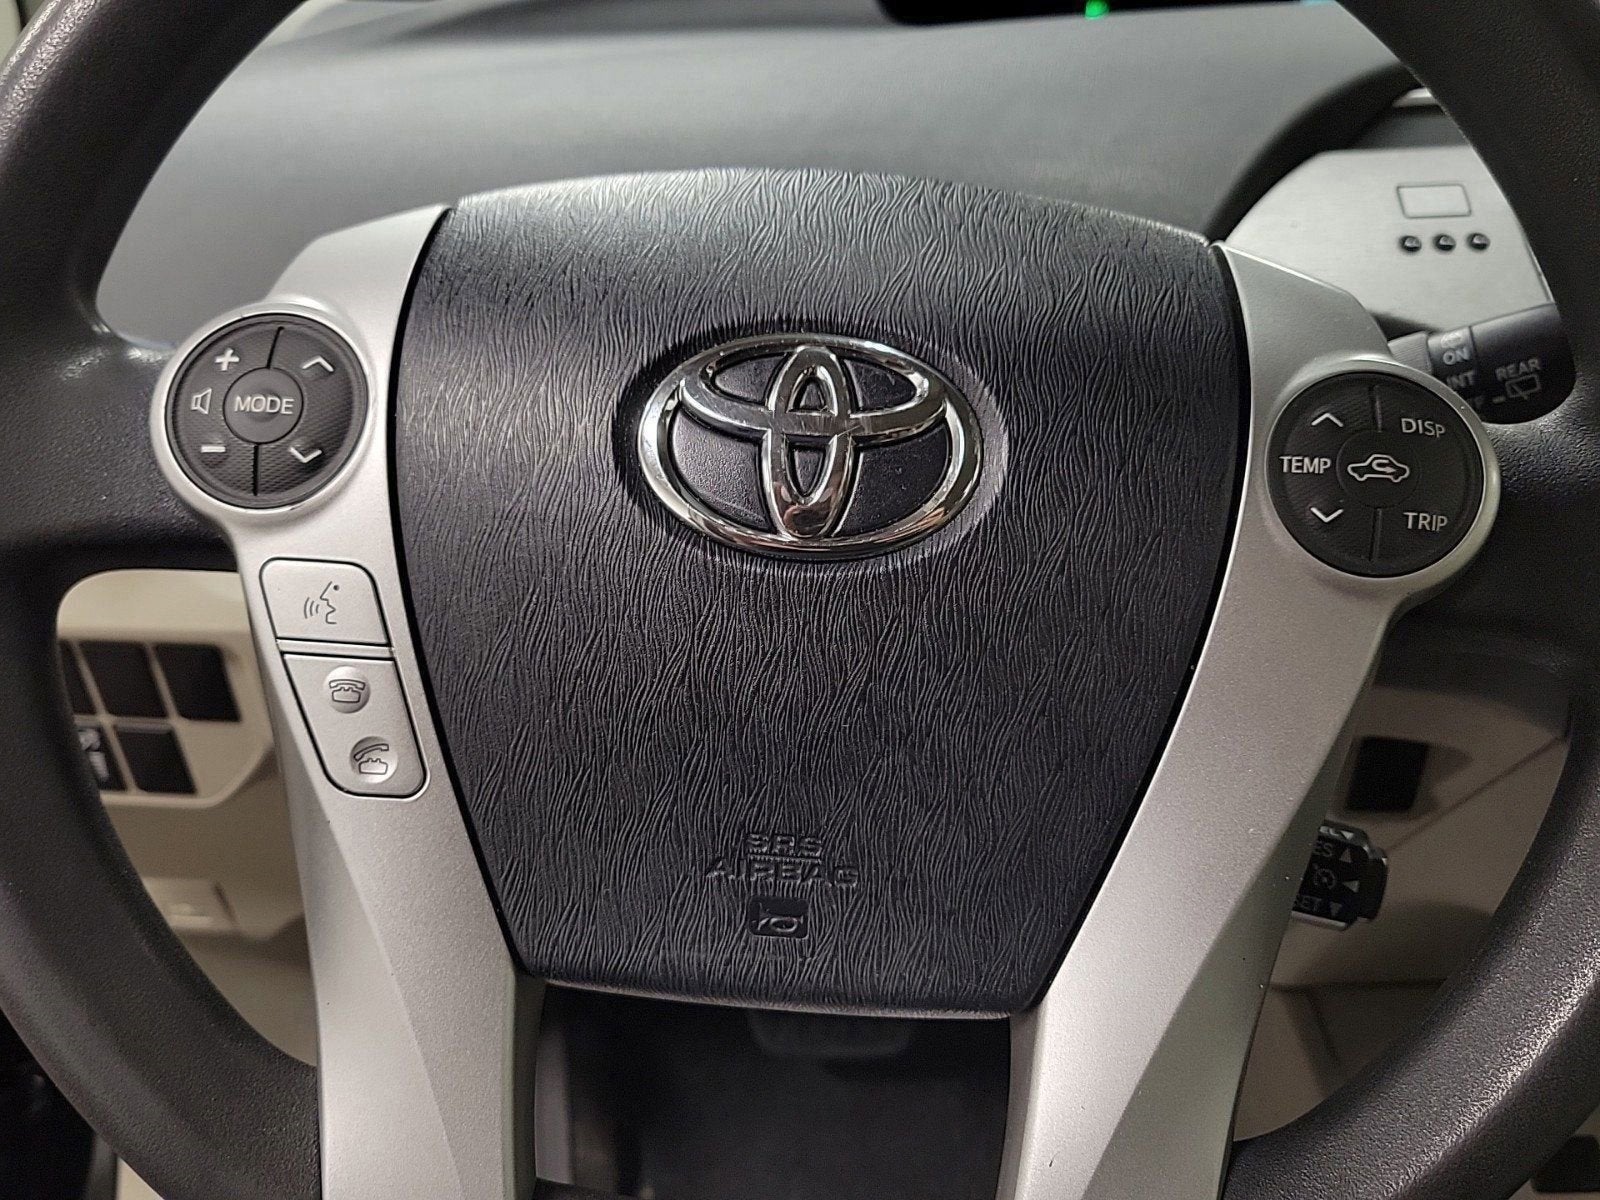 2015 Toyota Prius Three